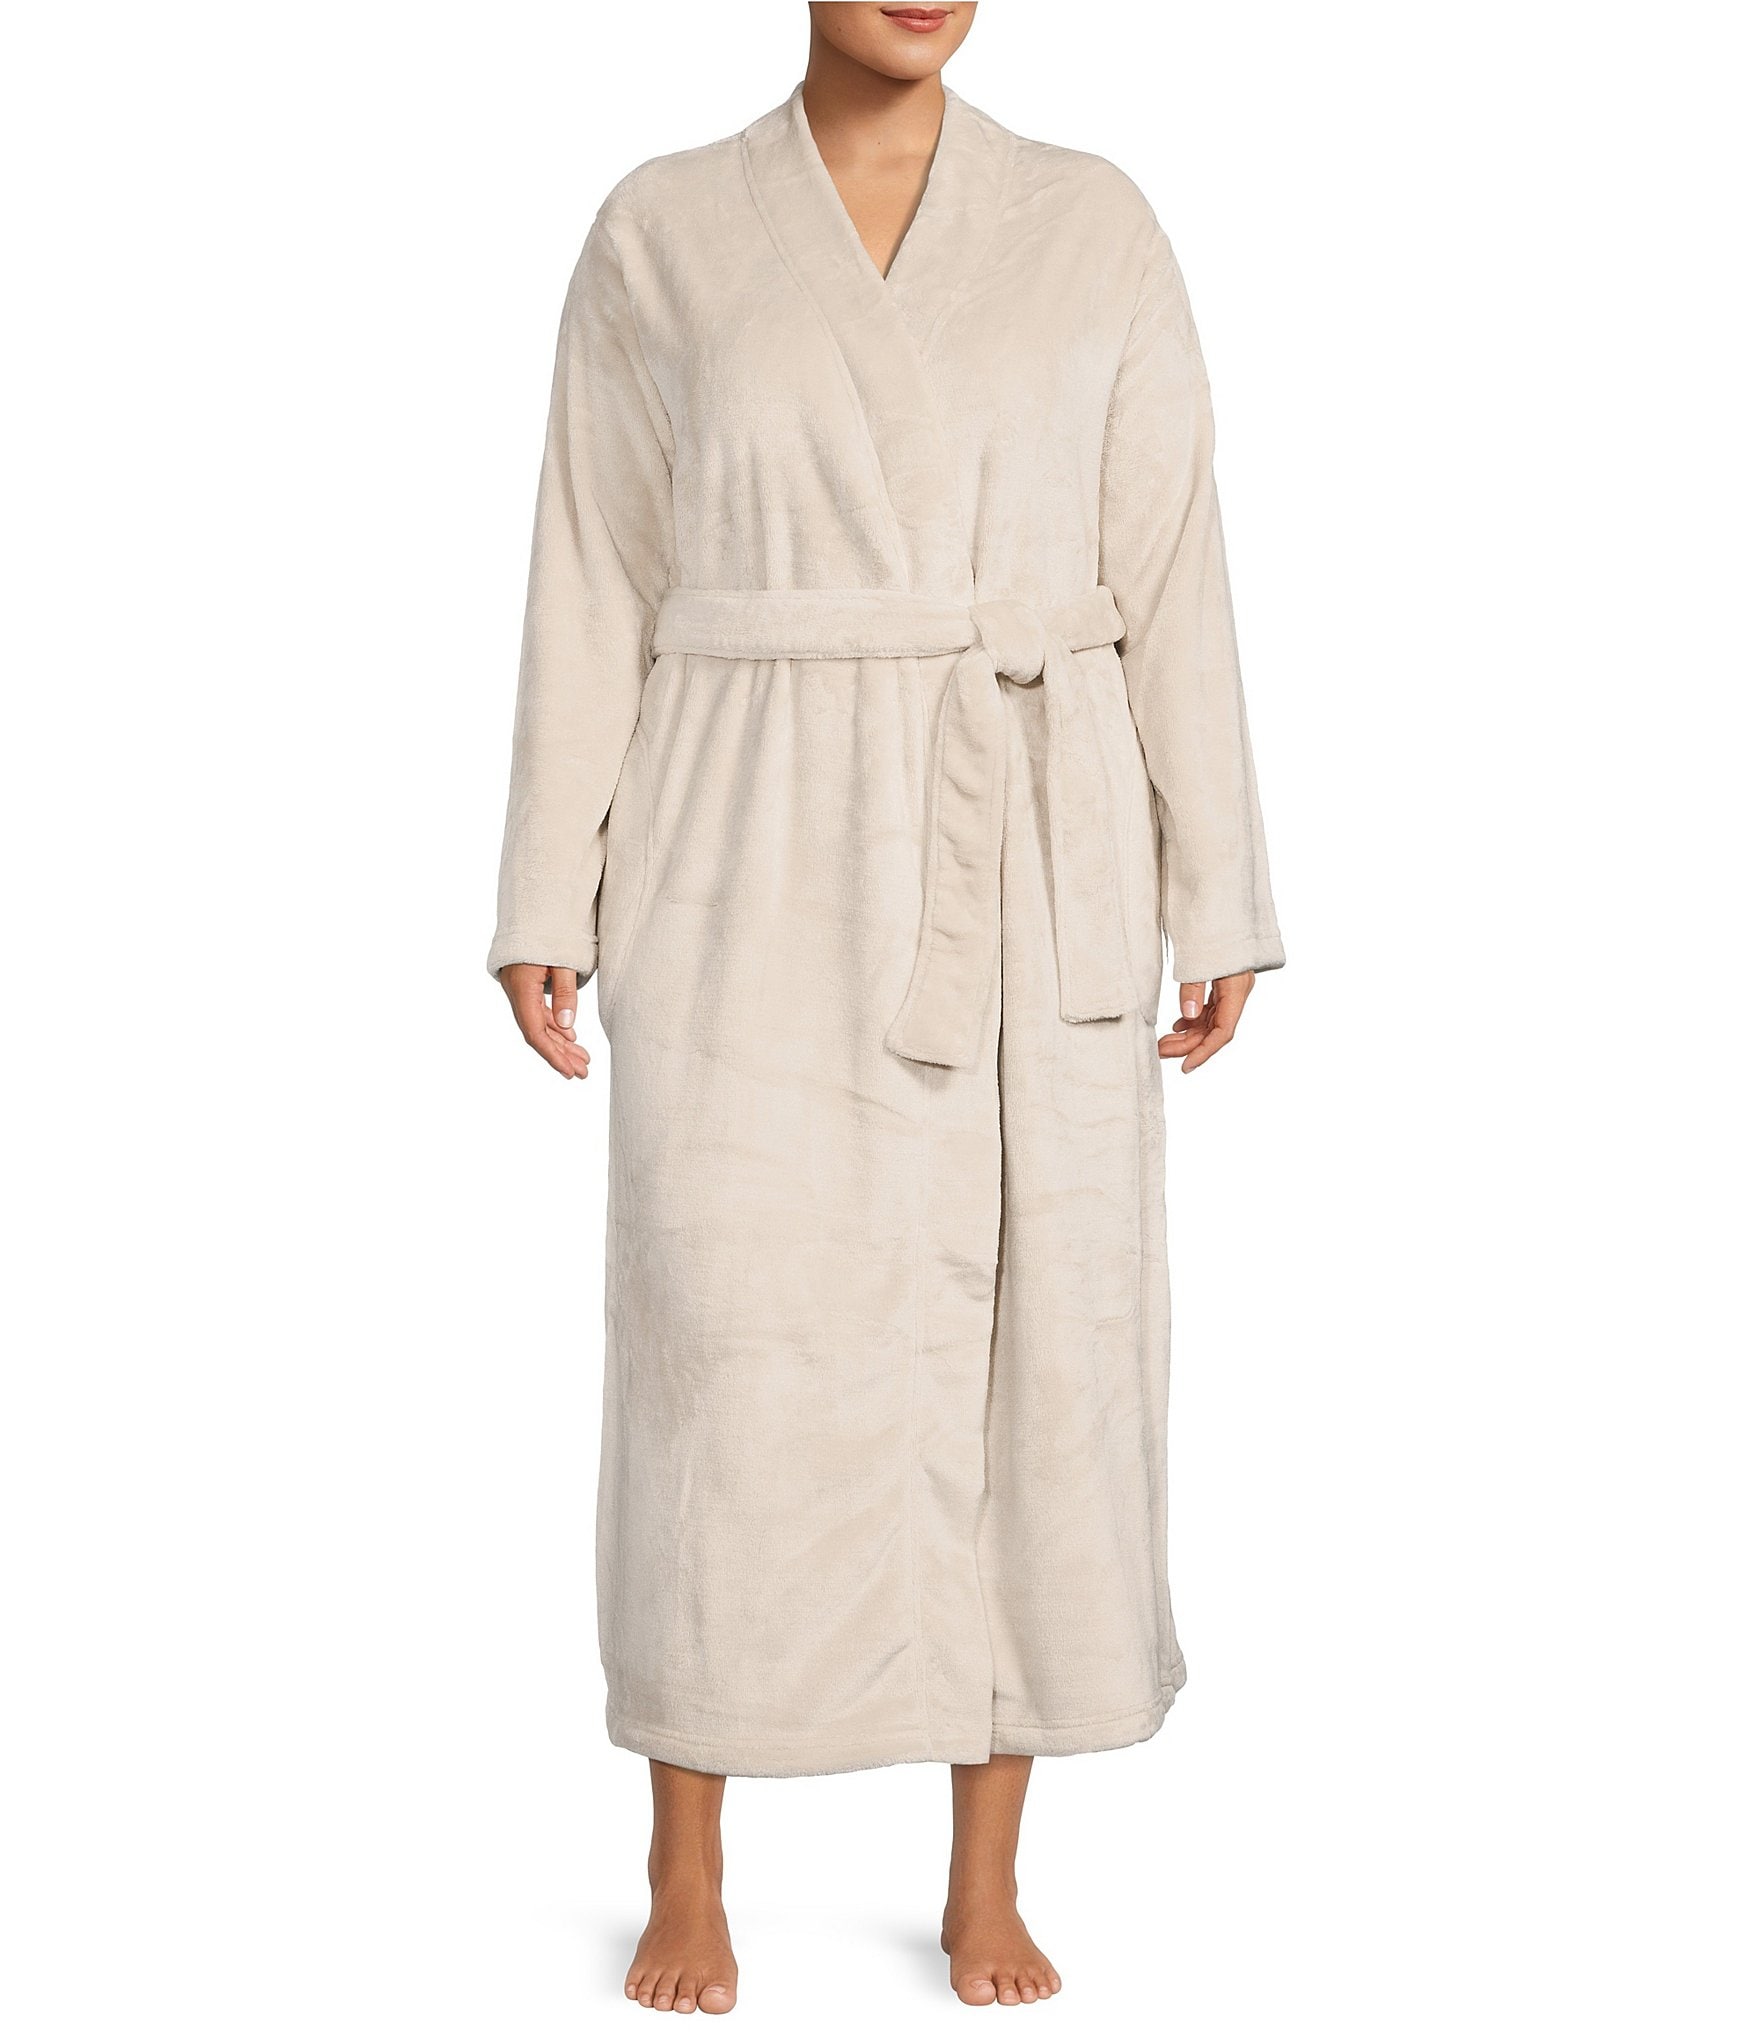 uggs marlow robe